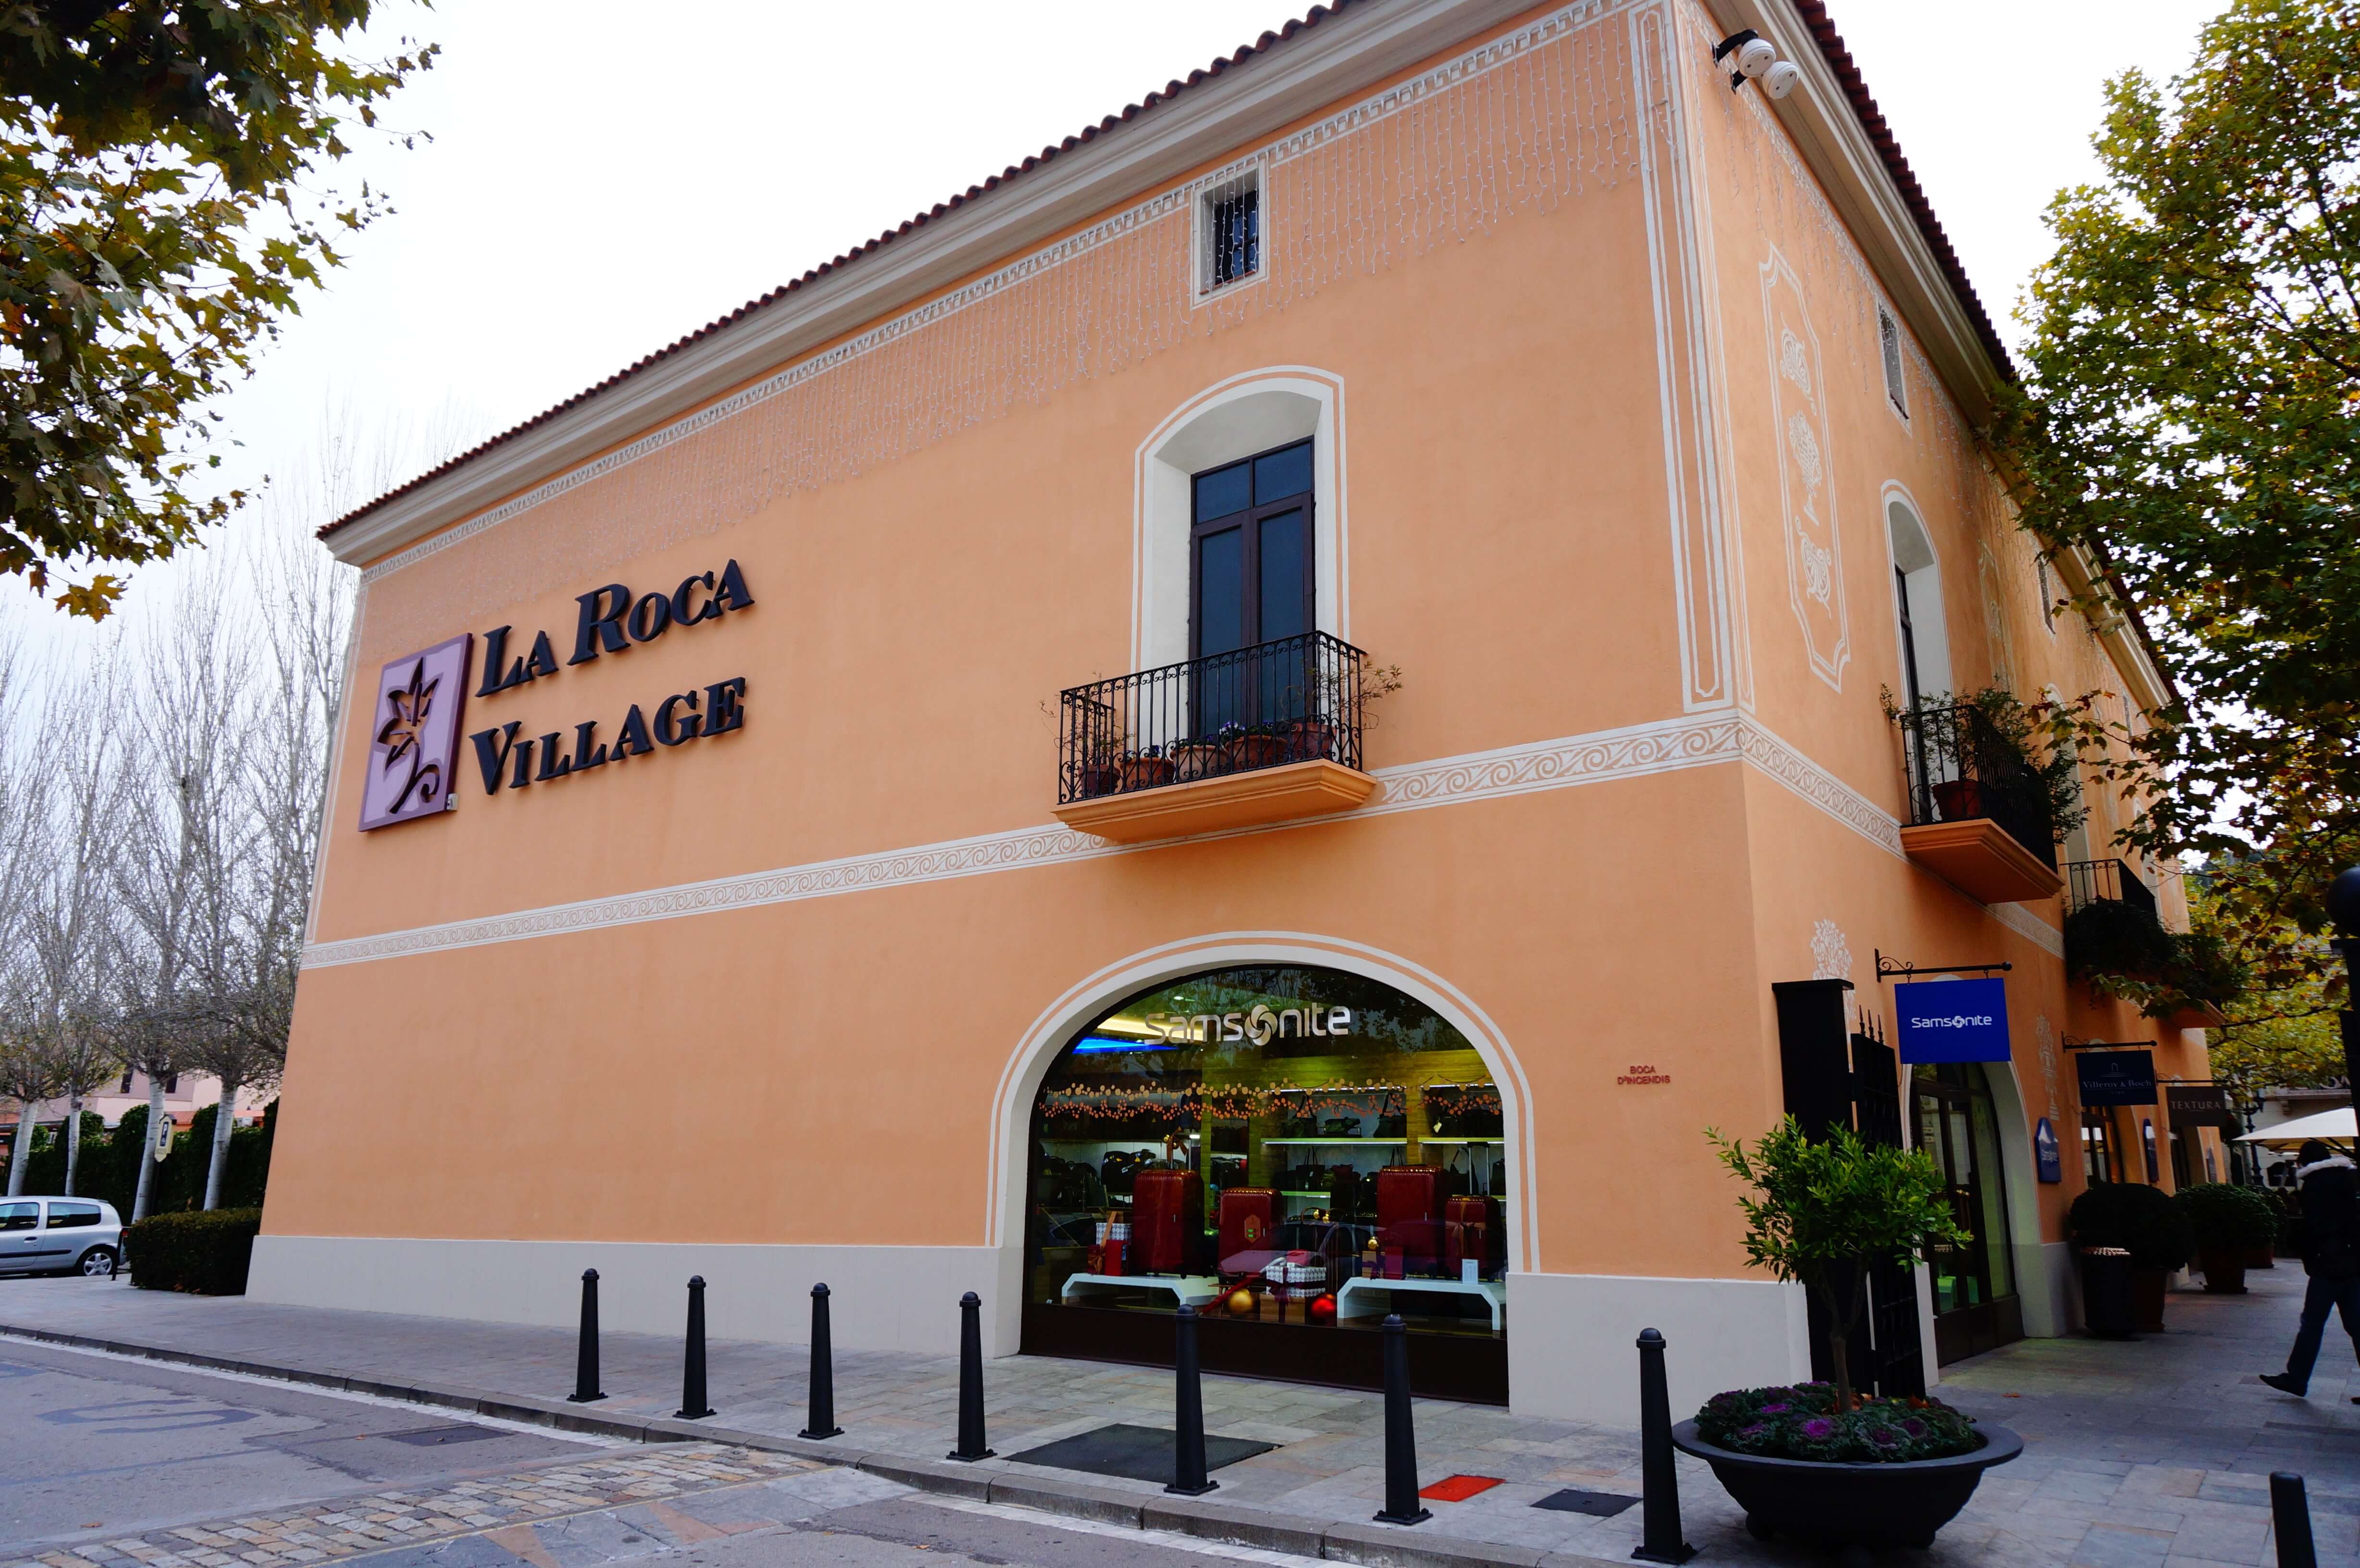 La Roca Village from Barcelona: Bus, Guide and VIP card 10% off